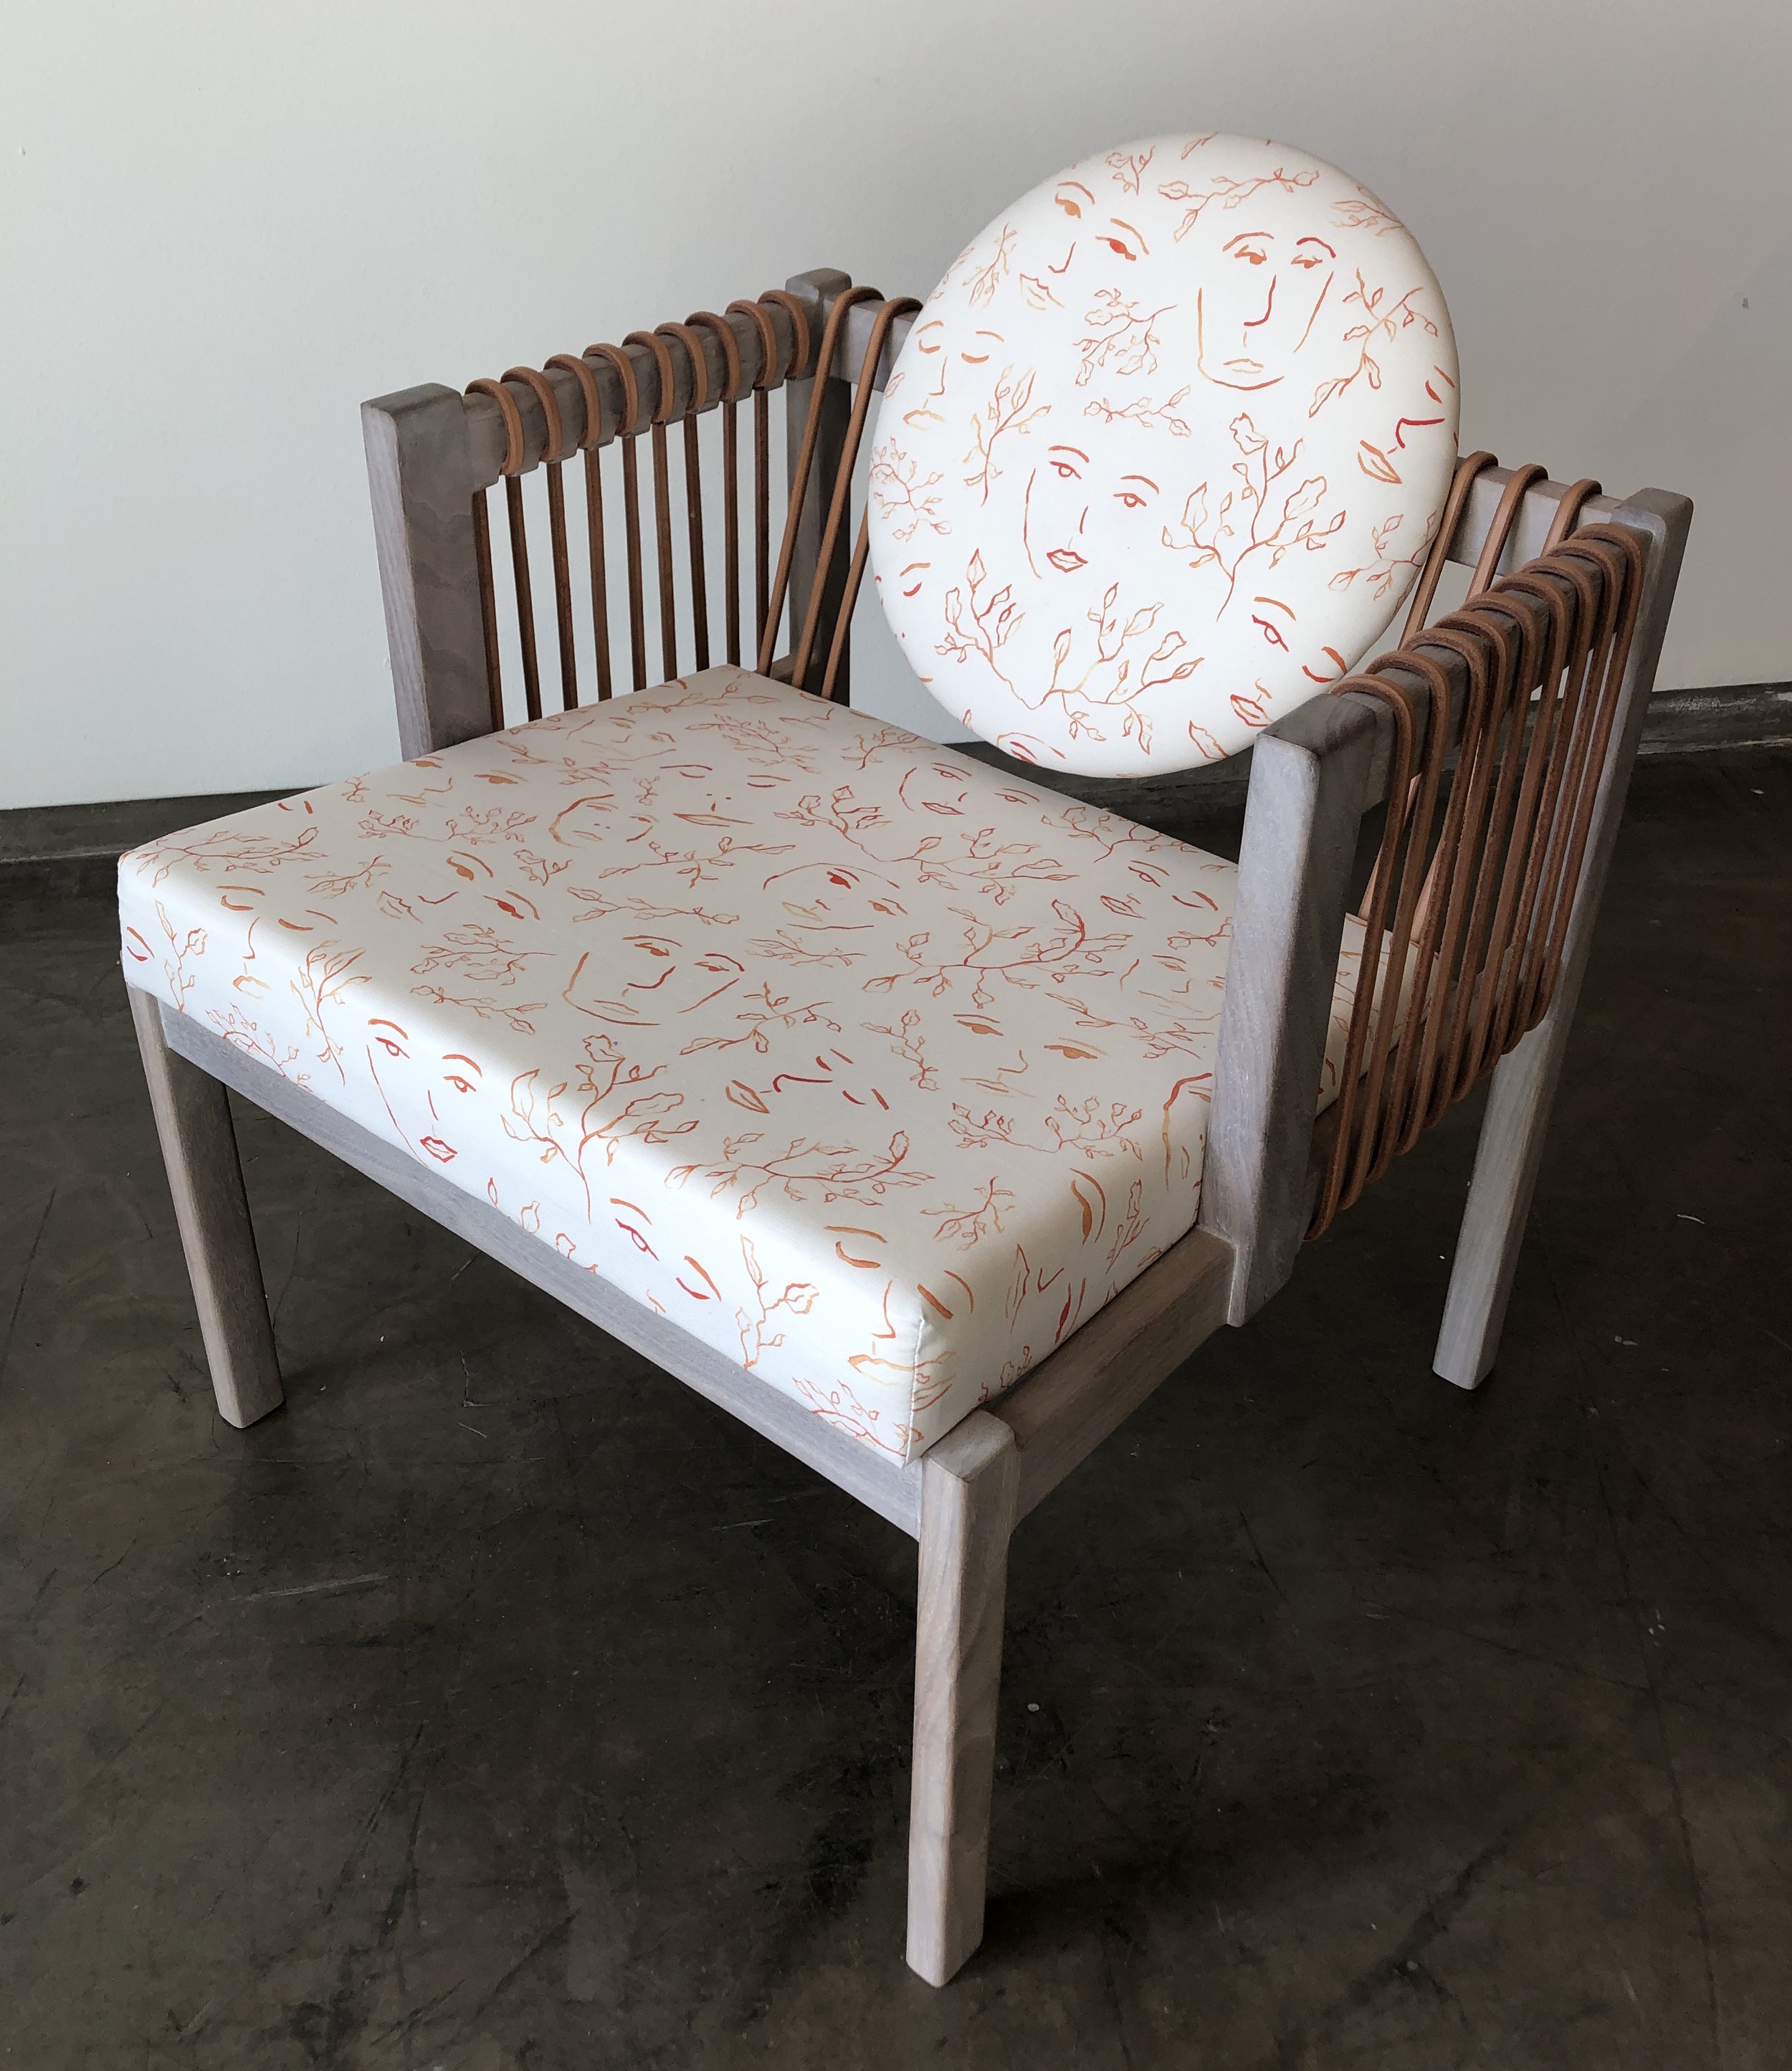 Orange Satyr Fabric - Thomas Hayes Studio Chair.JPG